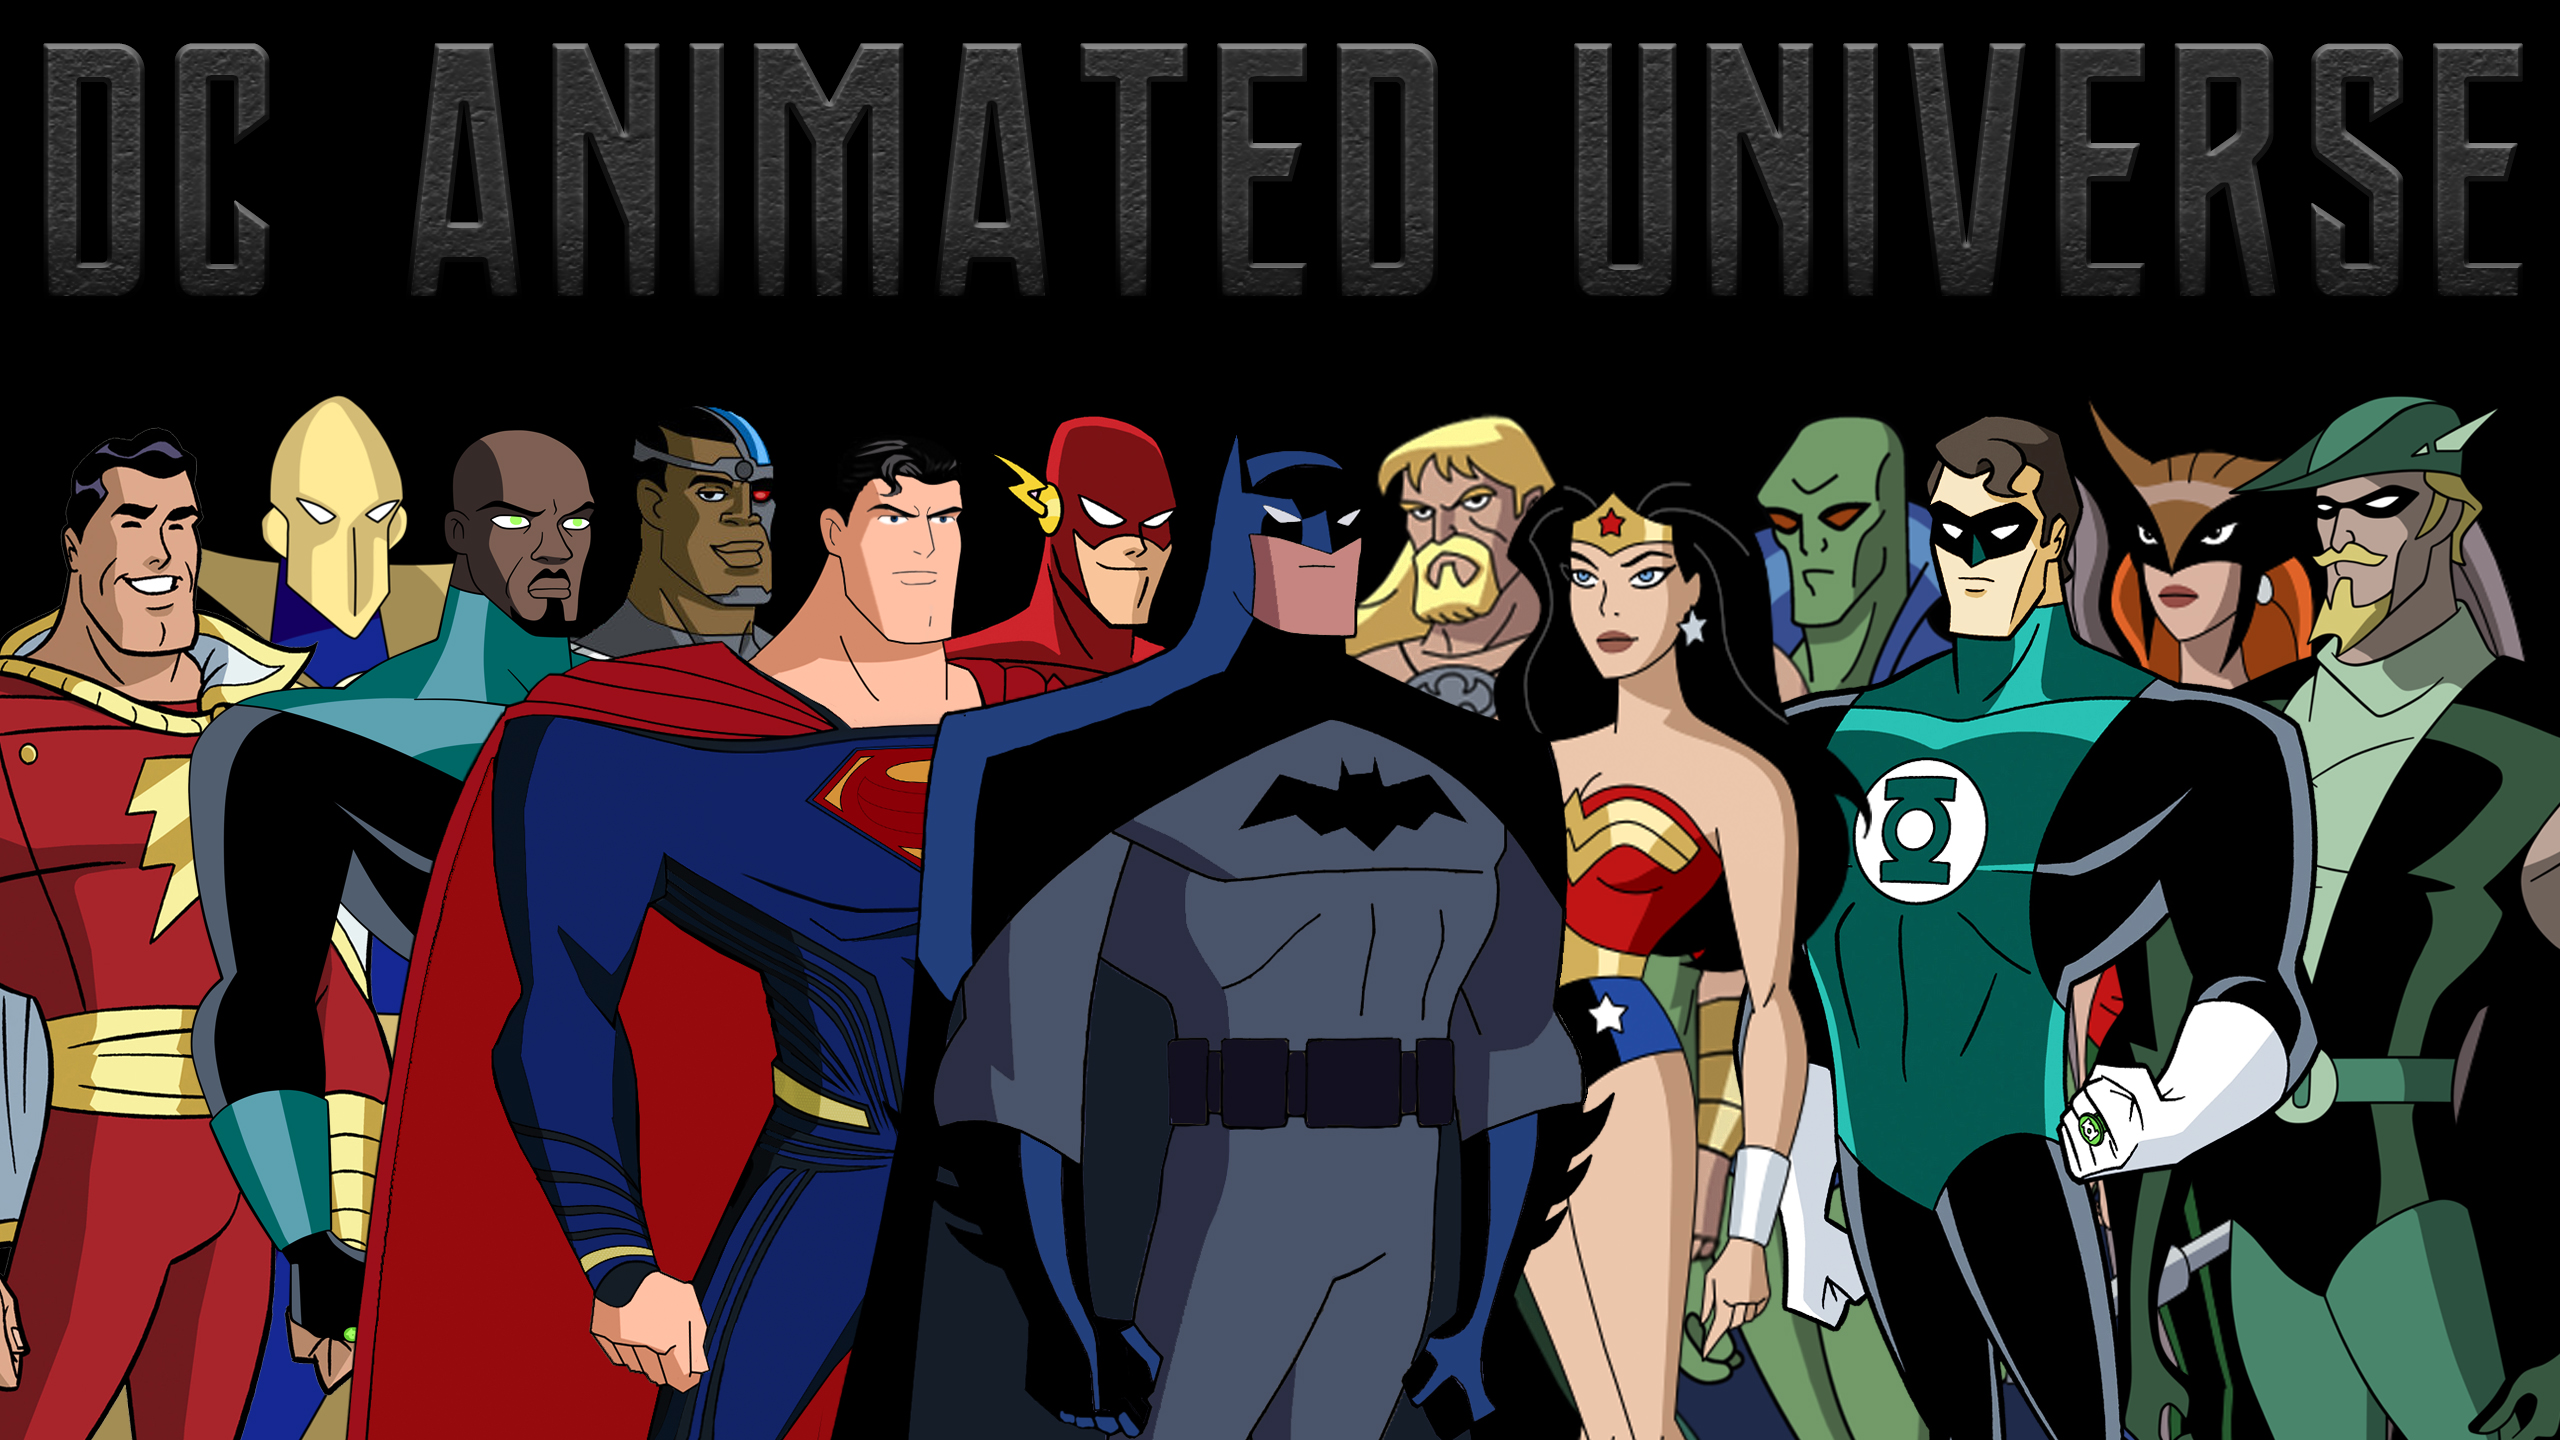 DC Animated Universe - Heroes by Daviddv1202 on DeviantArt